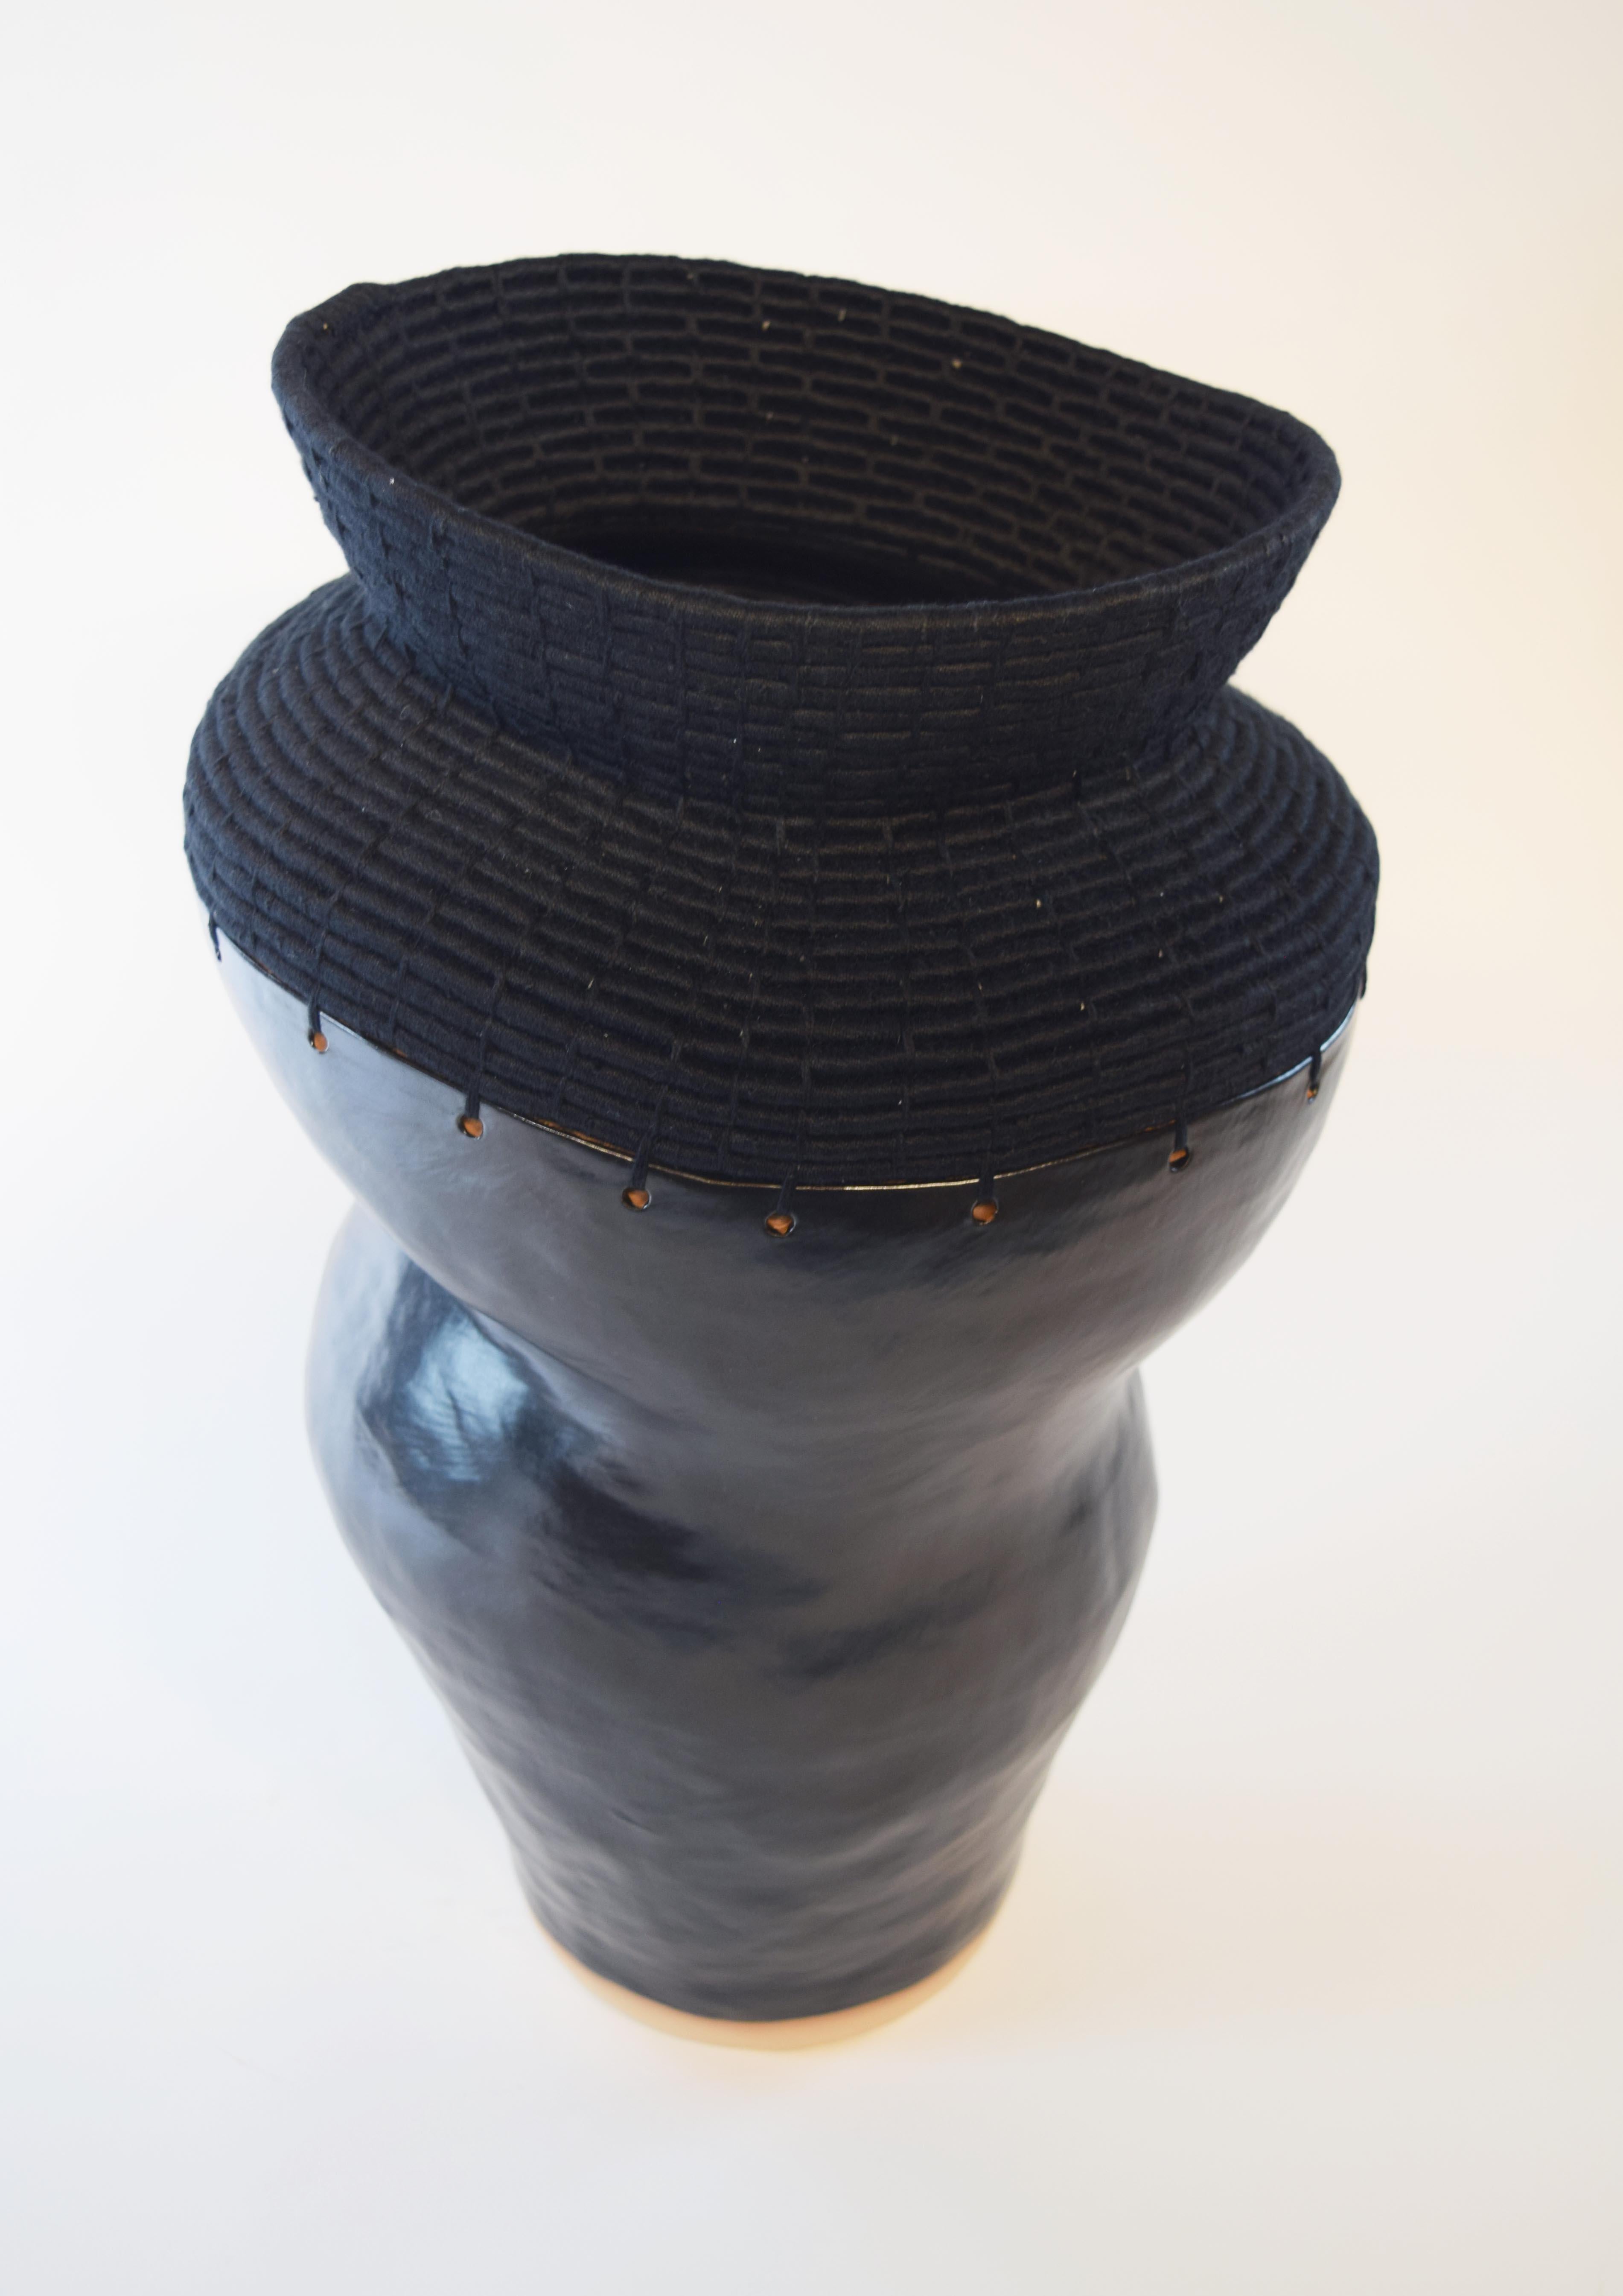 American One of a Kind Ceramic & Woven Fiber Vessel #762, Satin Black Glaze, Black Cotton For Sale